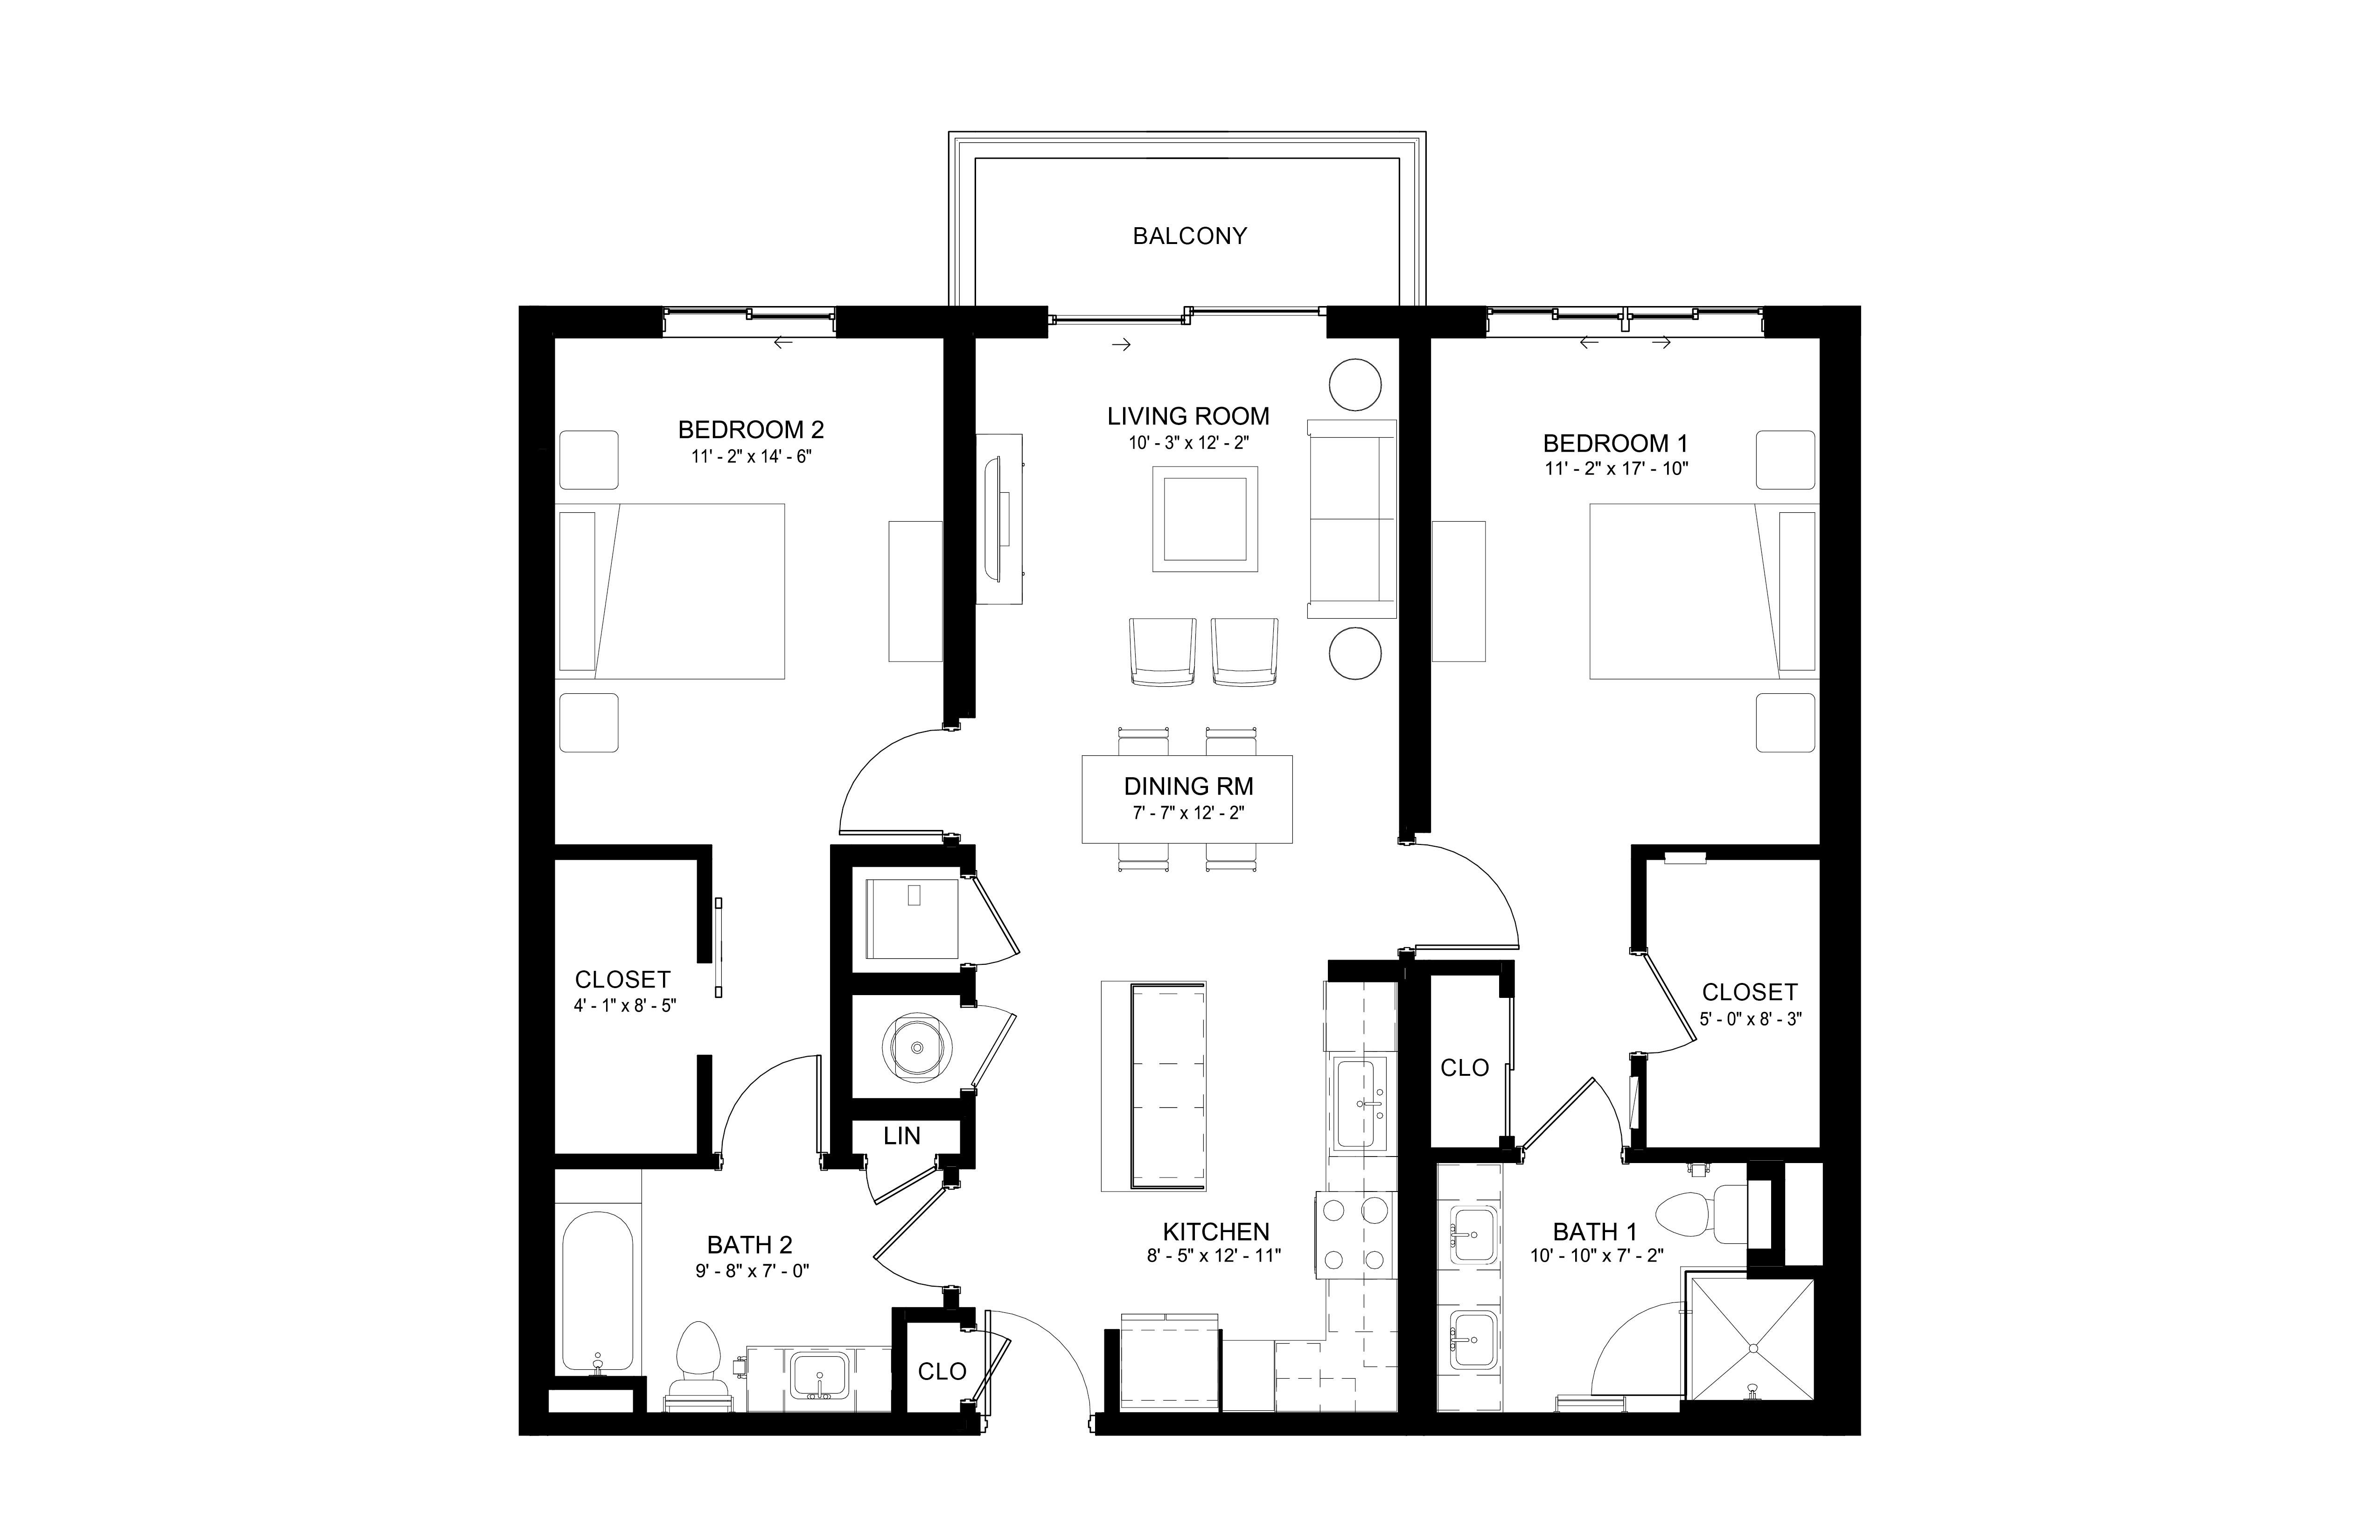 Apartment 440 floorplan